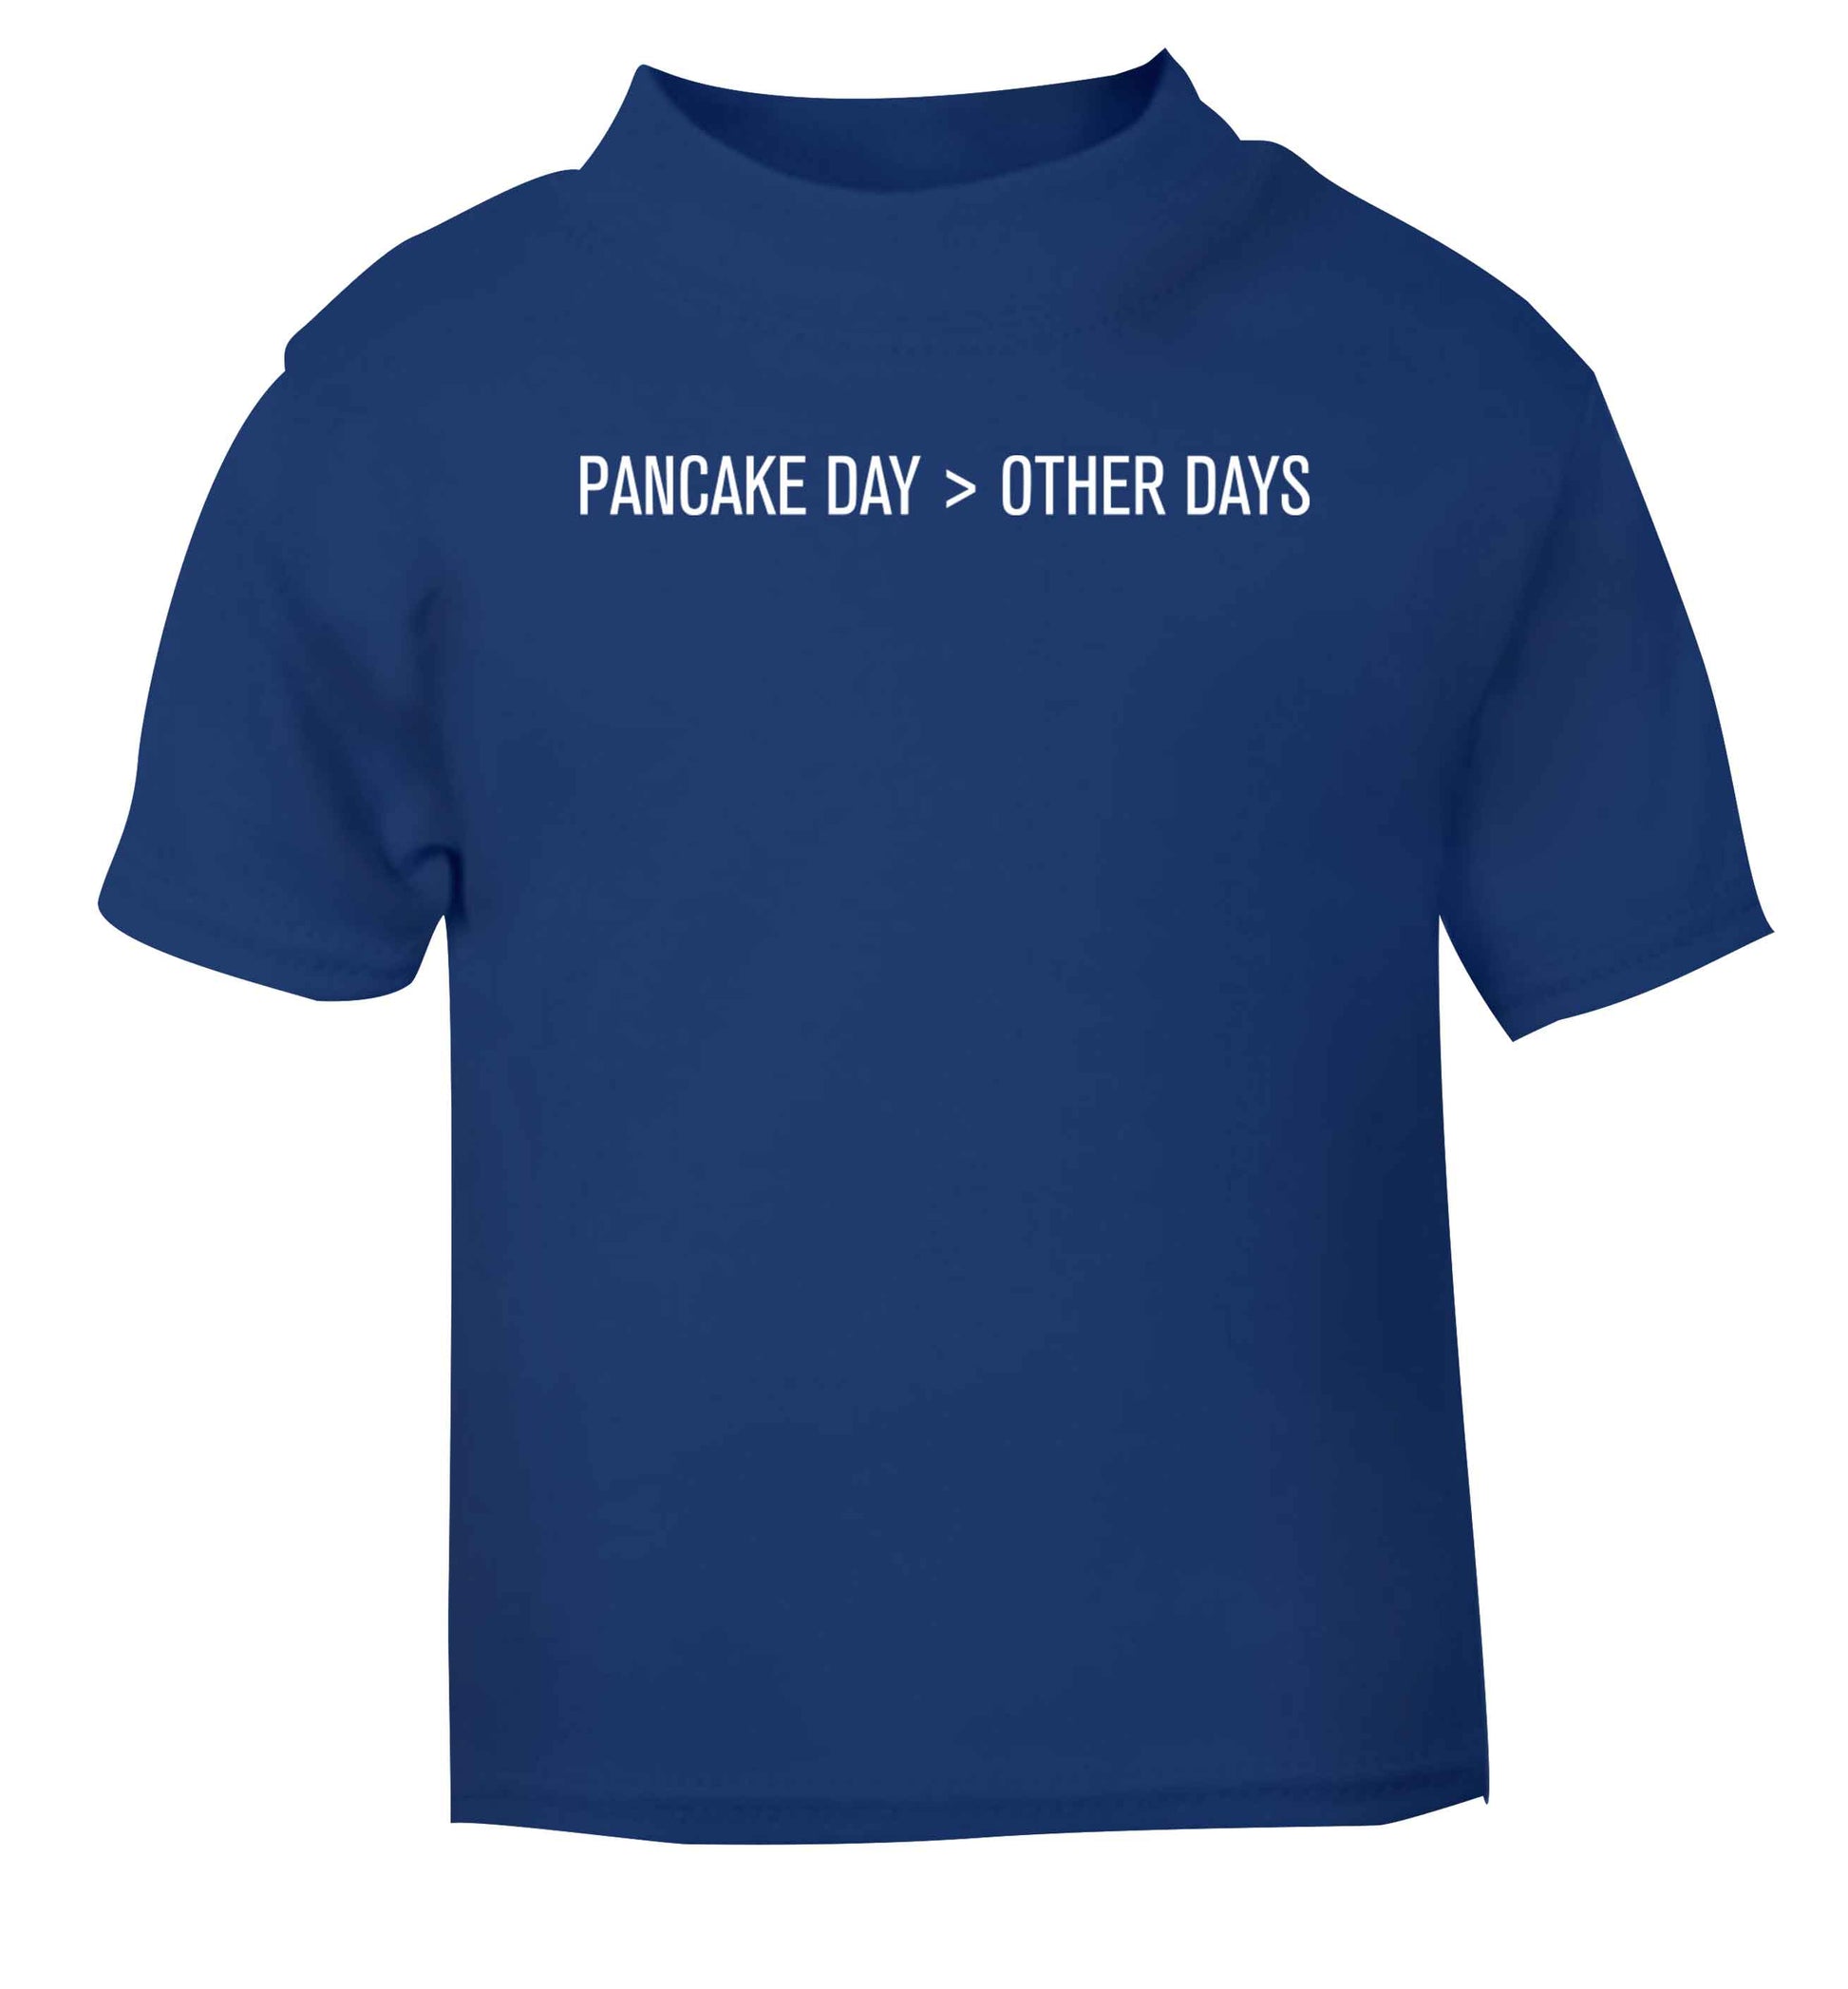 Pancake day > other days blue baby toddler Tshirt 2 Years